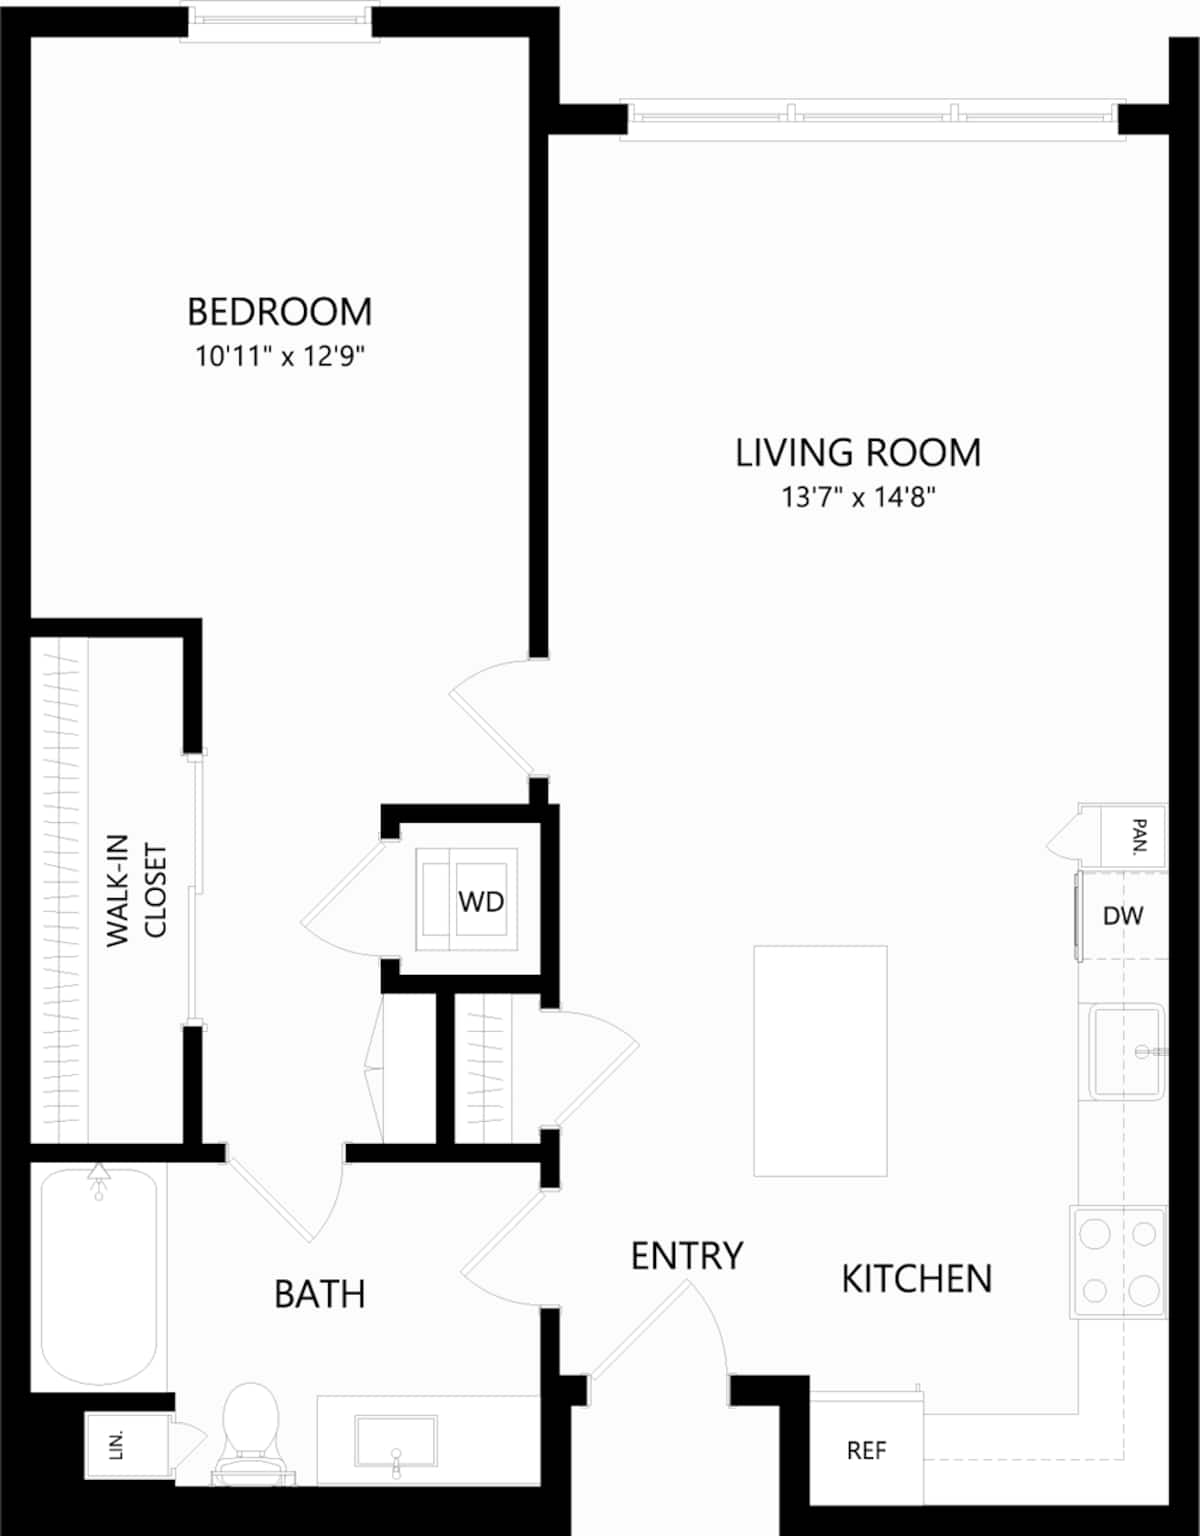 Floorplan diagram for A4.2, showing 1 bedroom